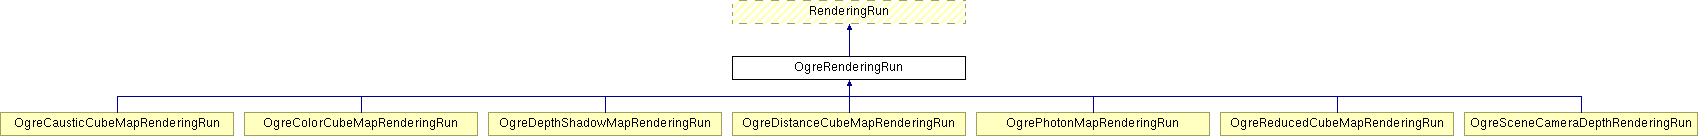 GTP/trunk/Lib/Illum/IllumModule/doc/html/class_ogre_rendering_run.png